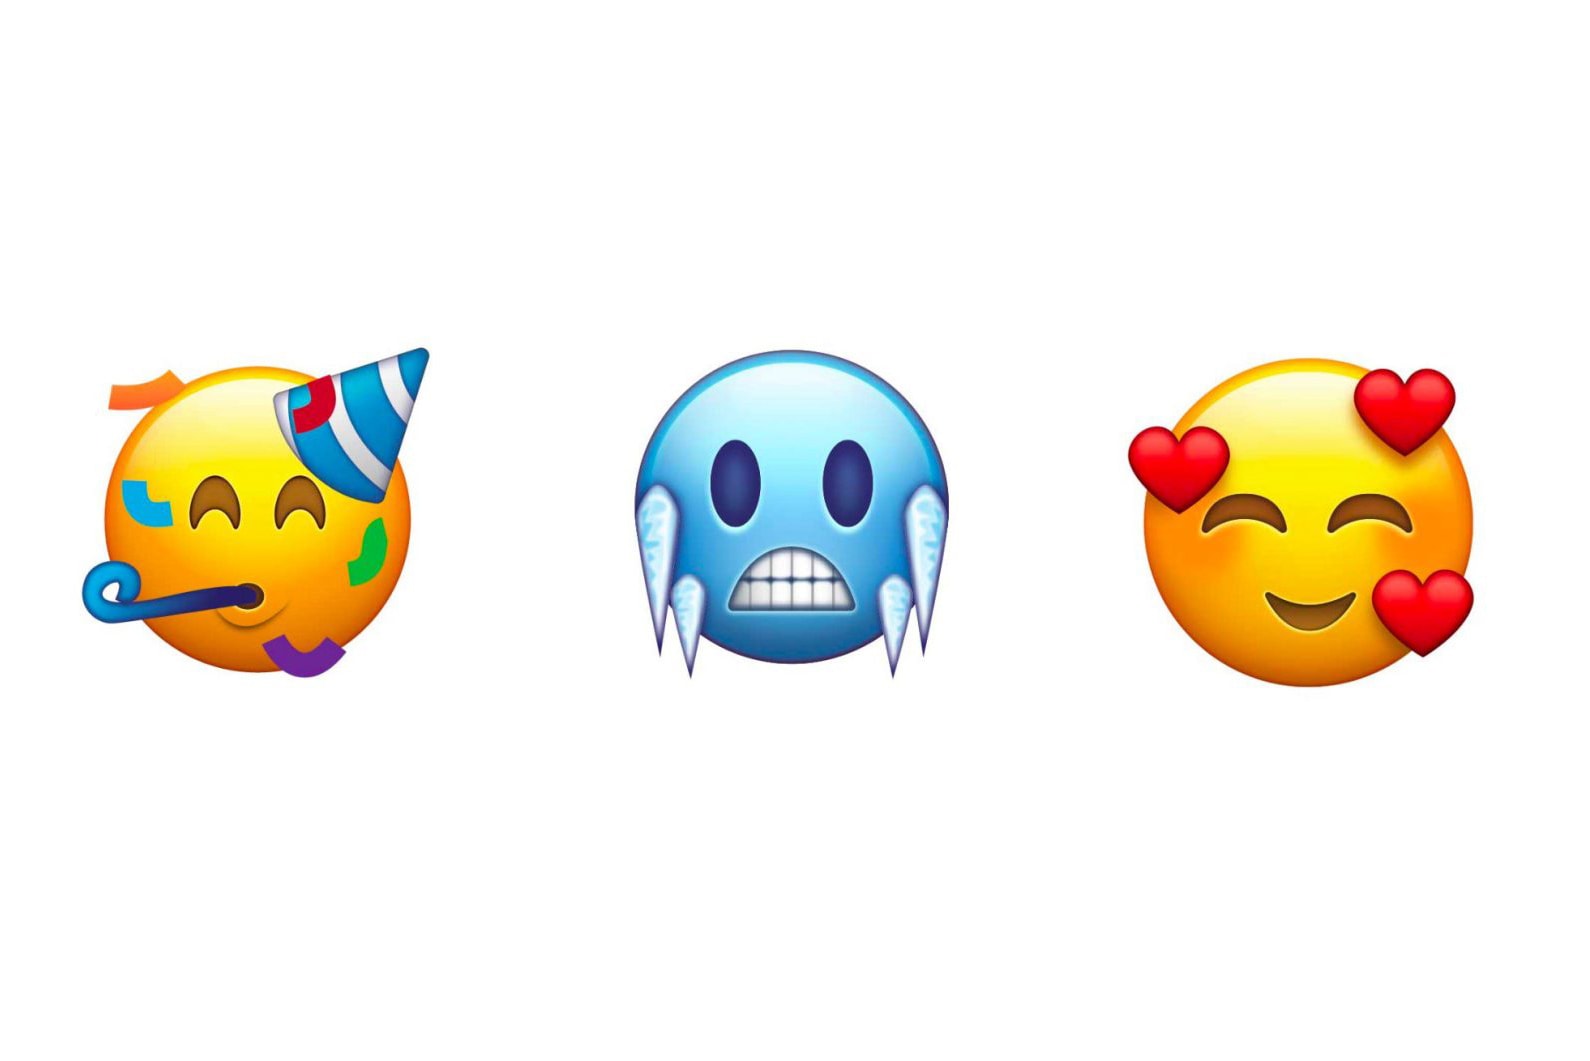 Unicode Consortium 發表全新 67 枚全新 Emoji 表情圖案草圖